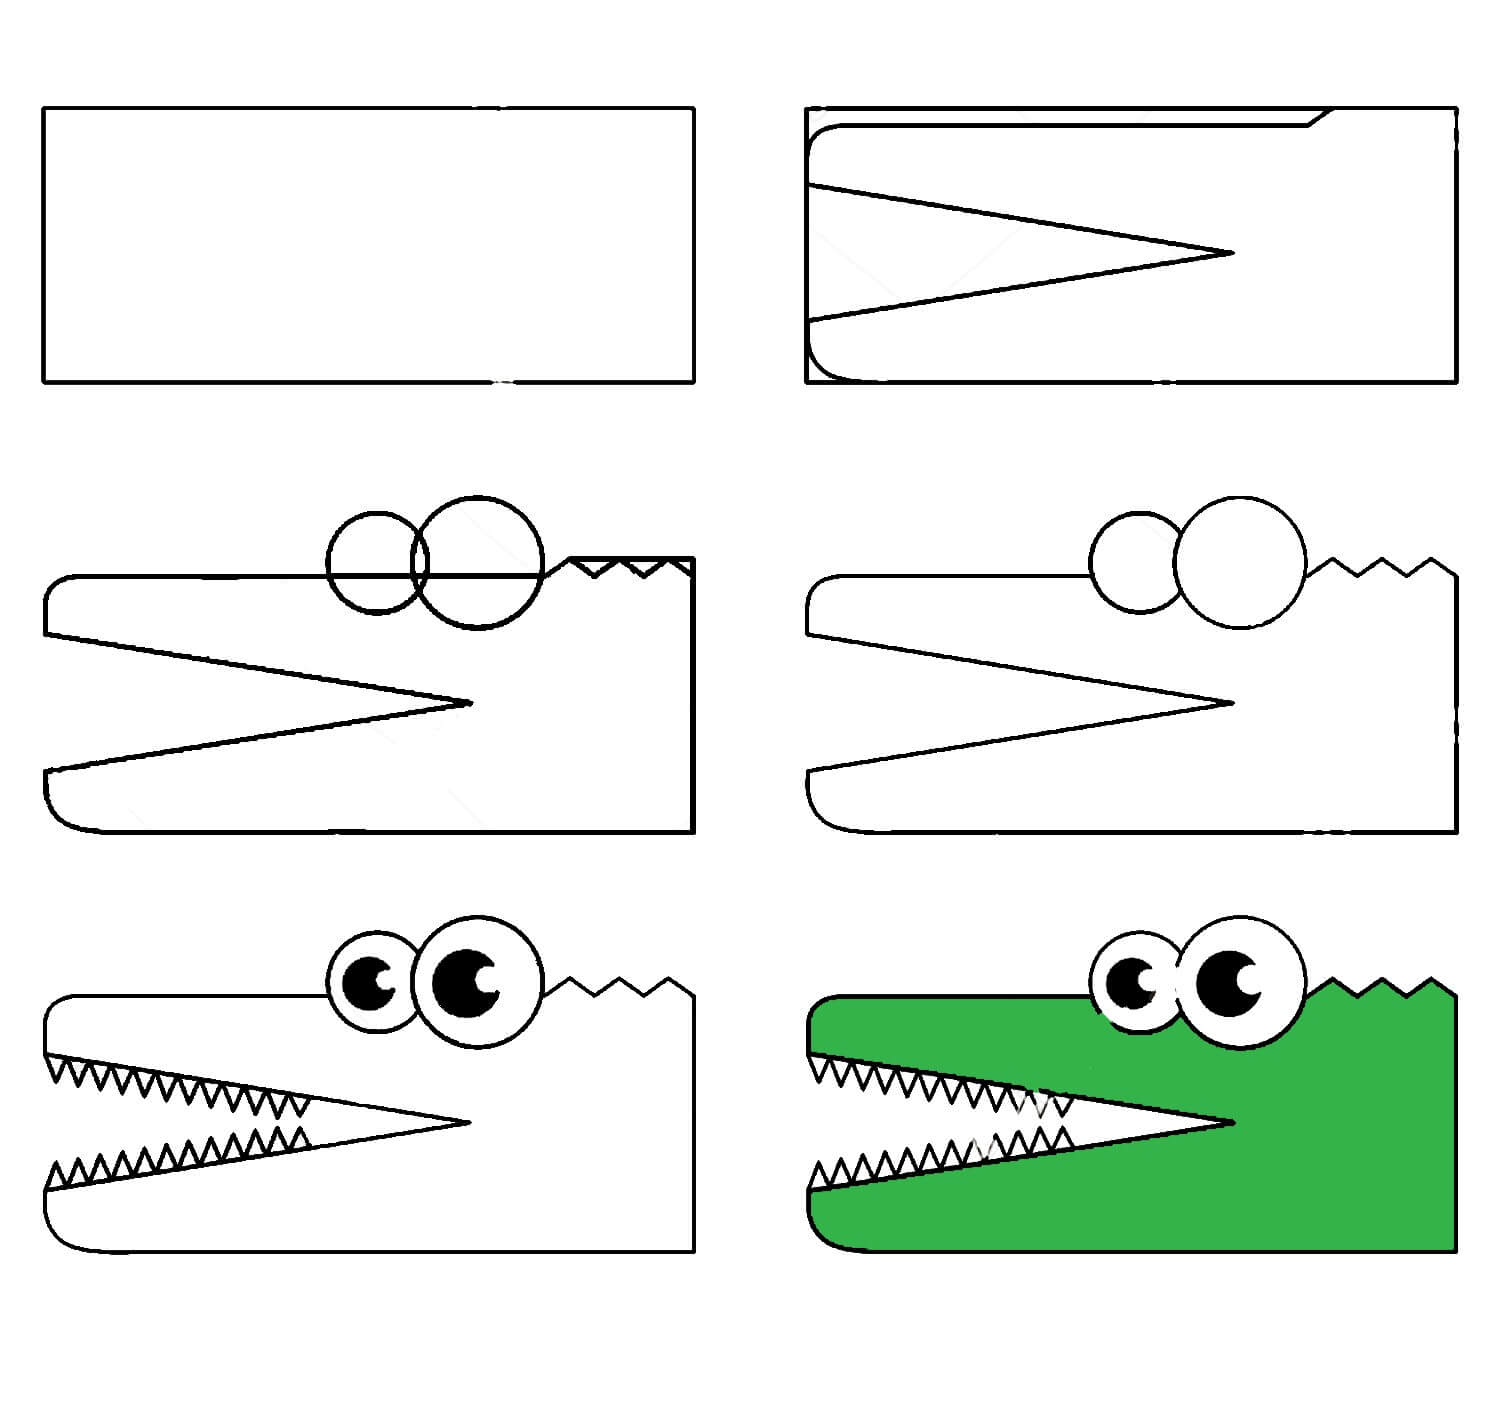 Alligator idea (10) Drawing Ideas